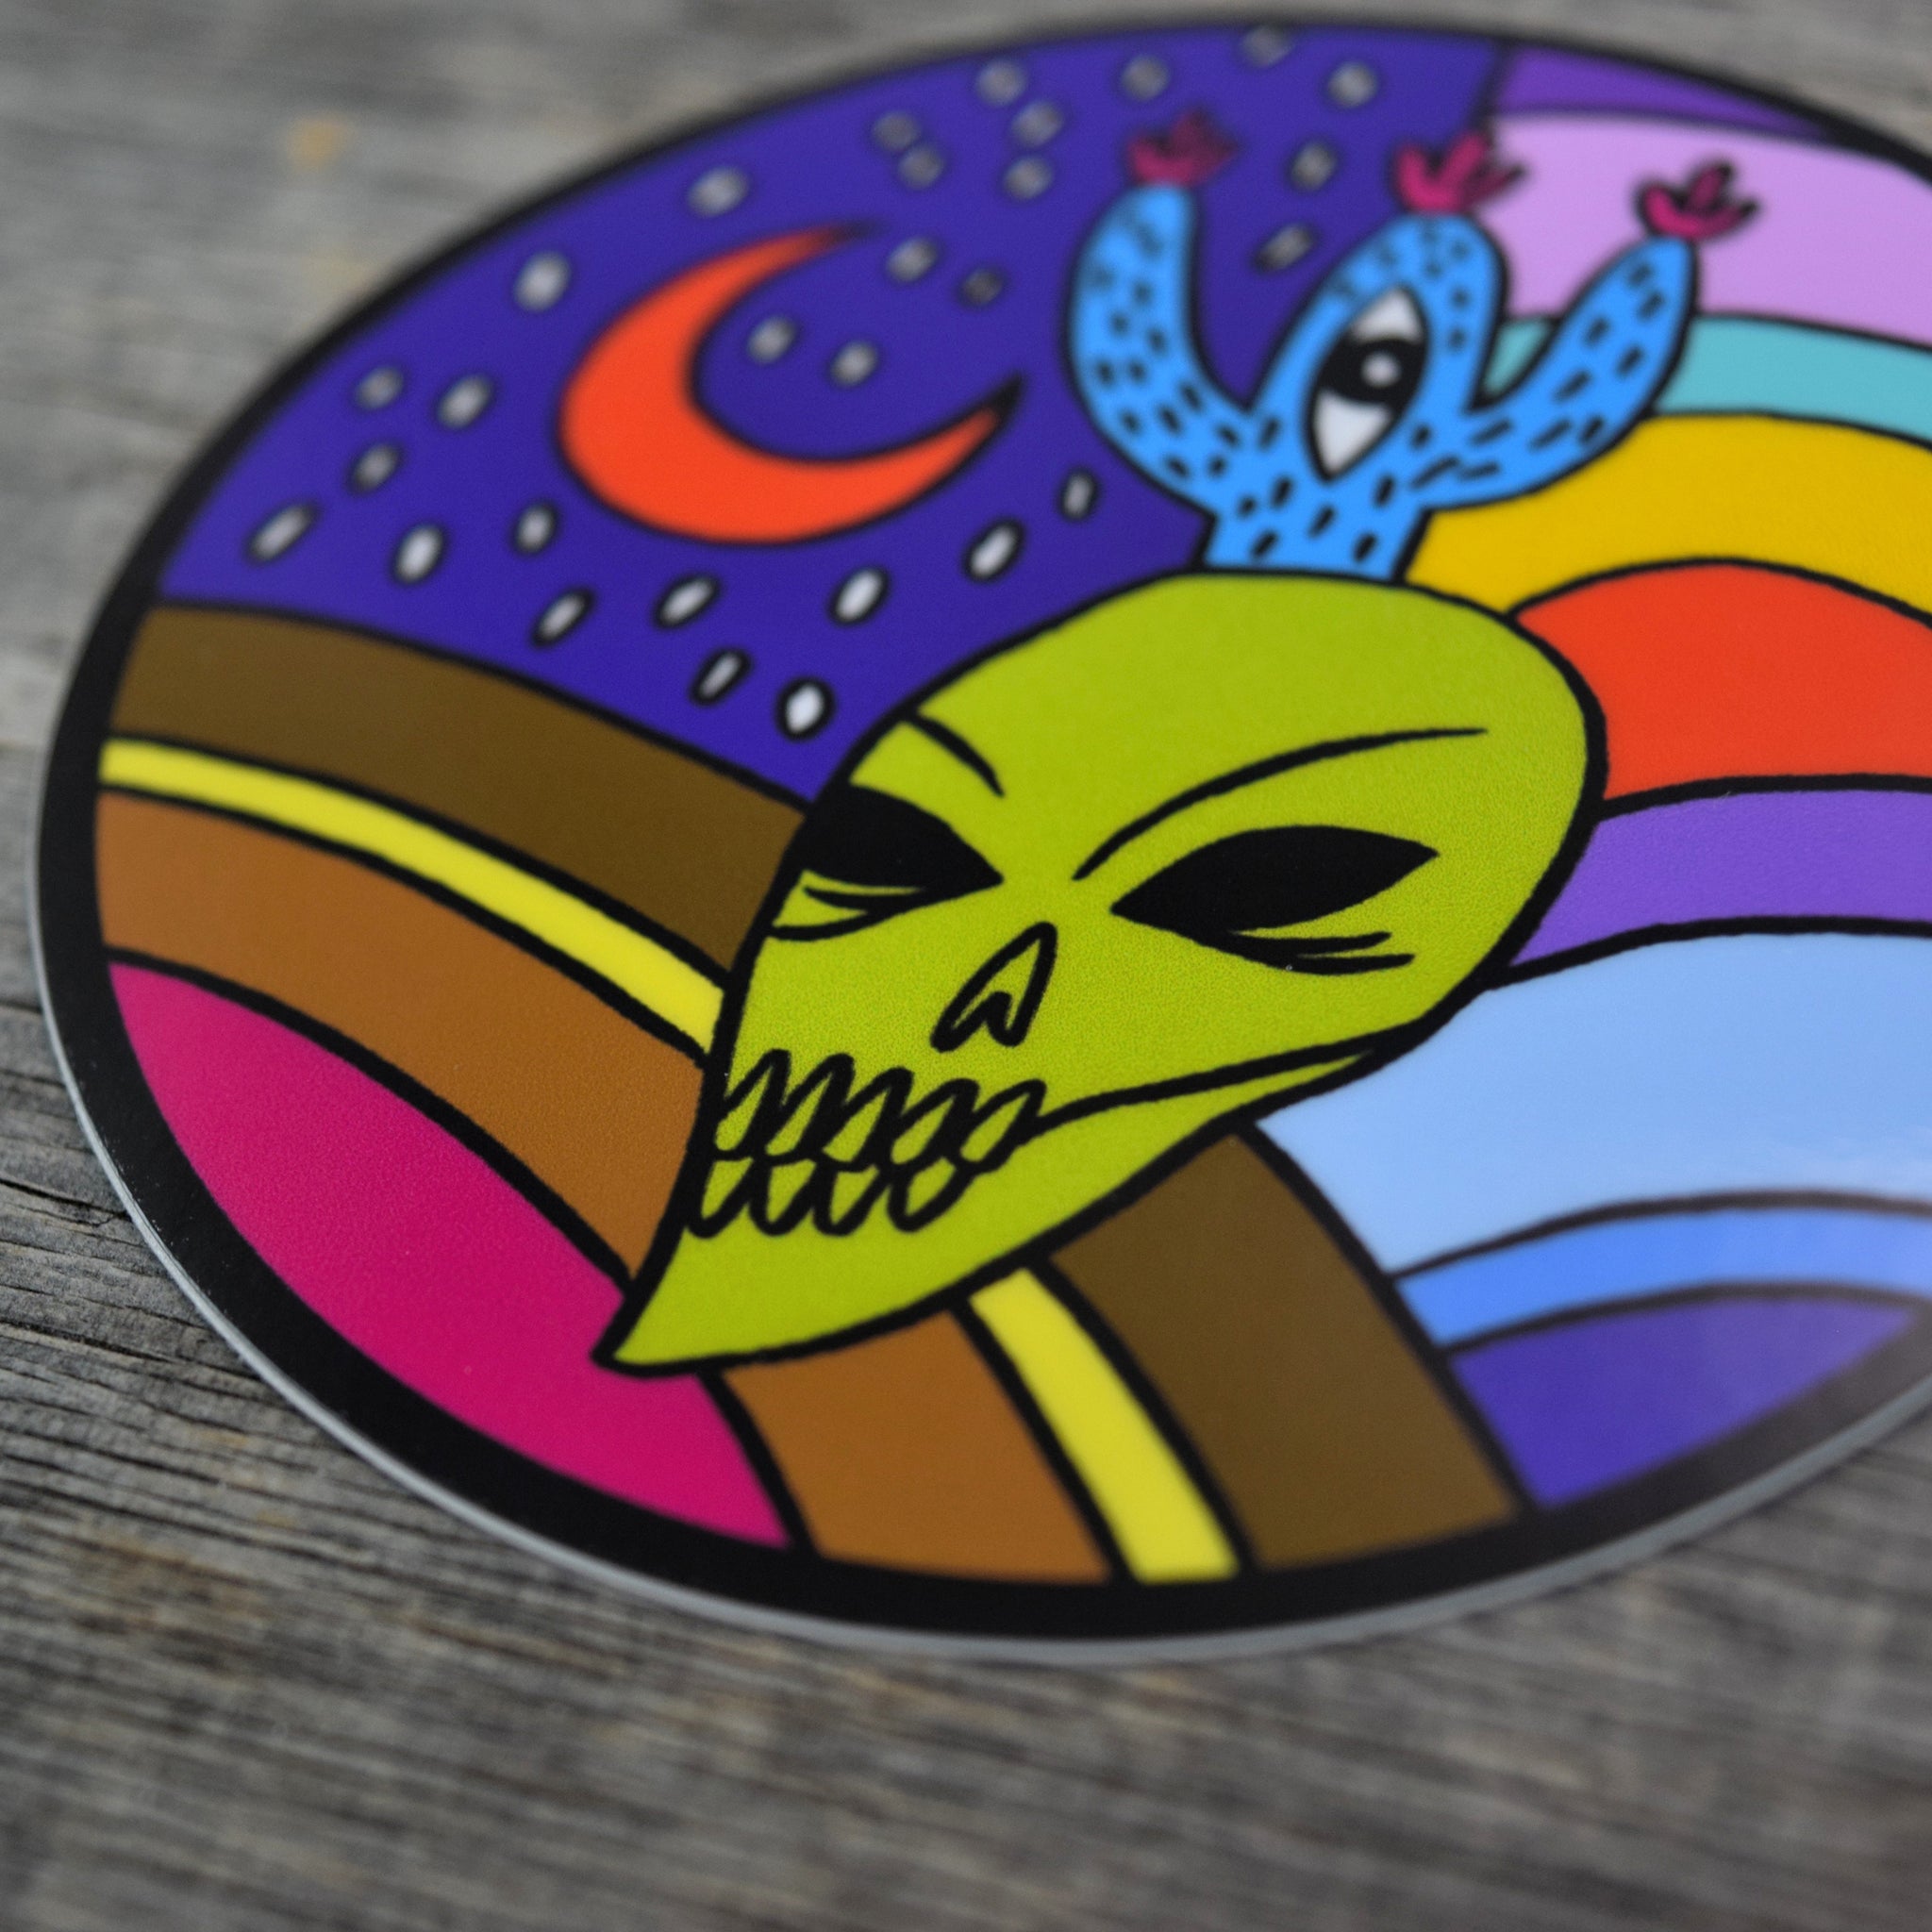 Skull & Cactus Vinyl Sticker